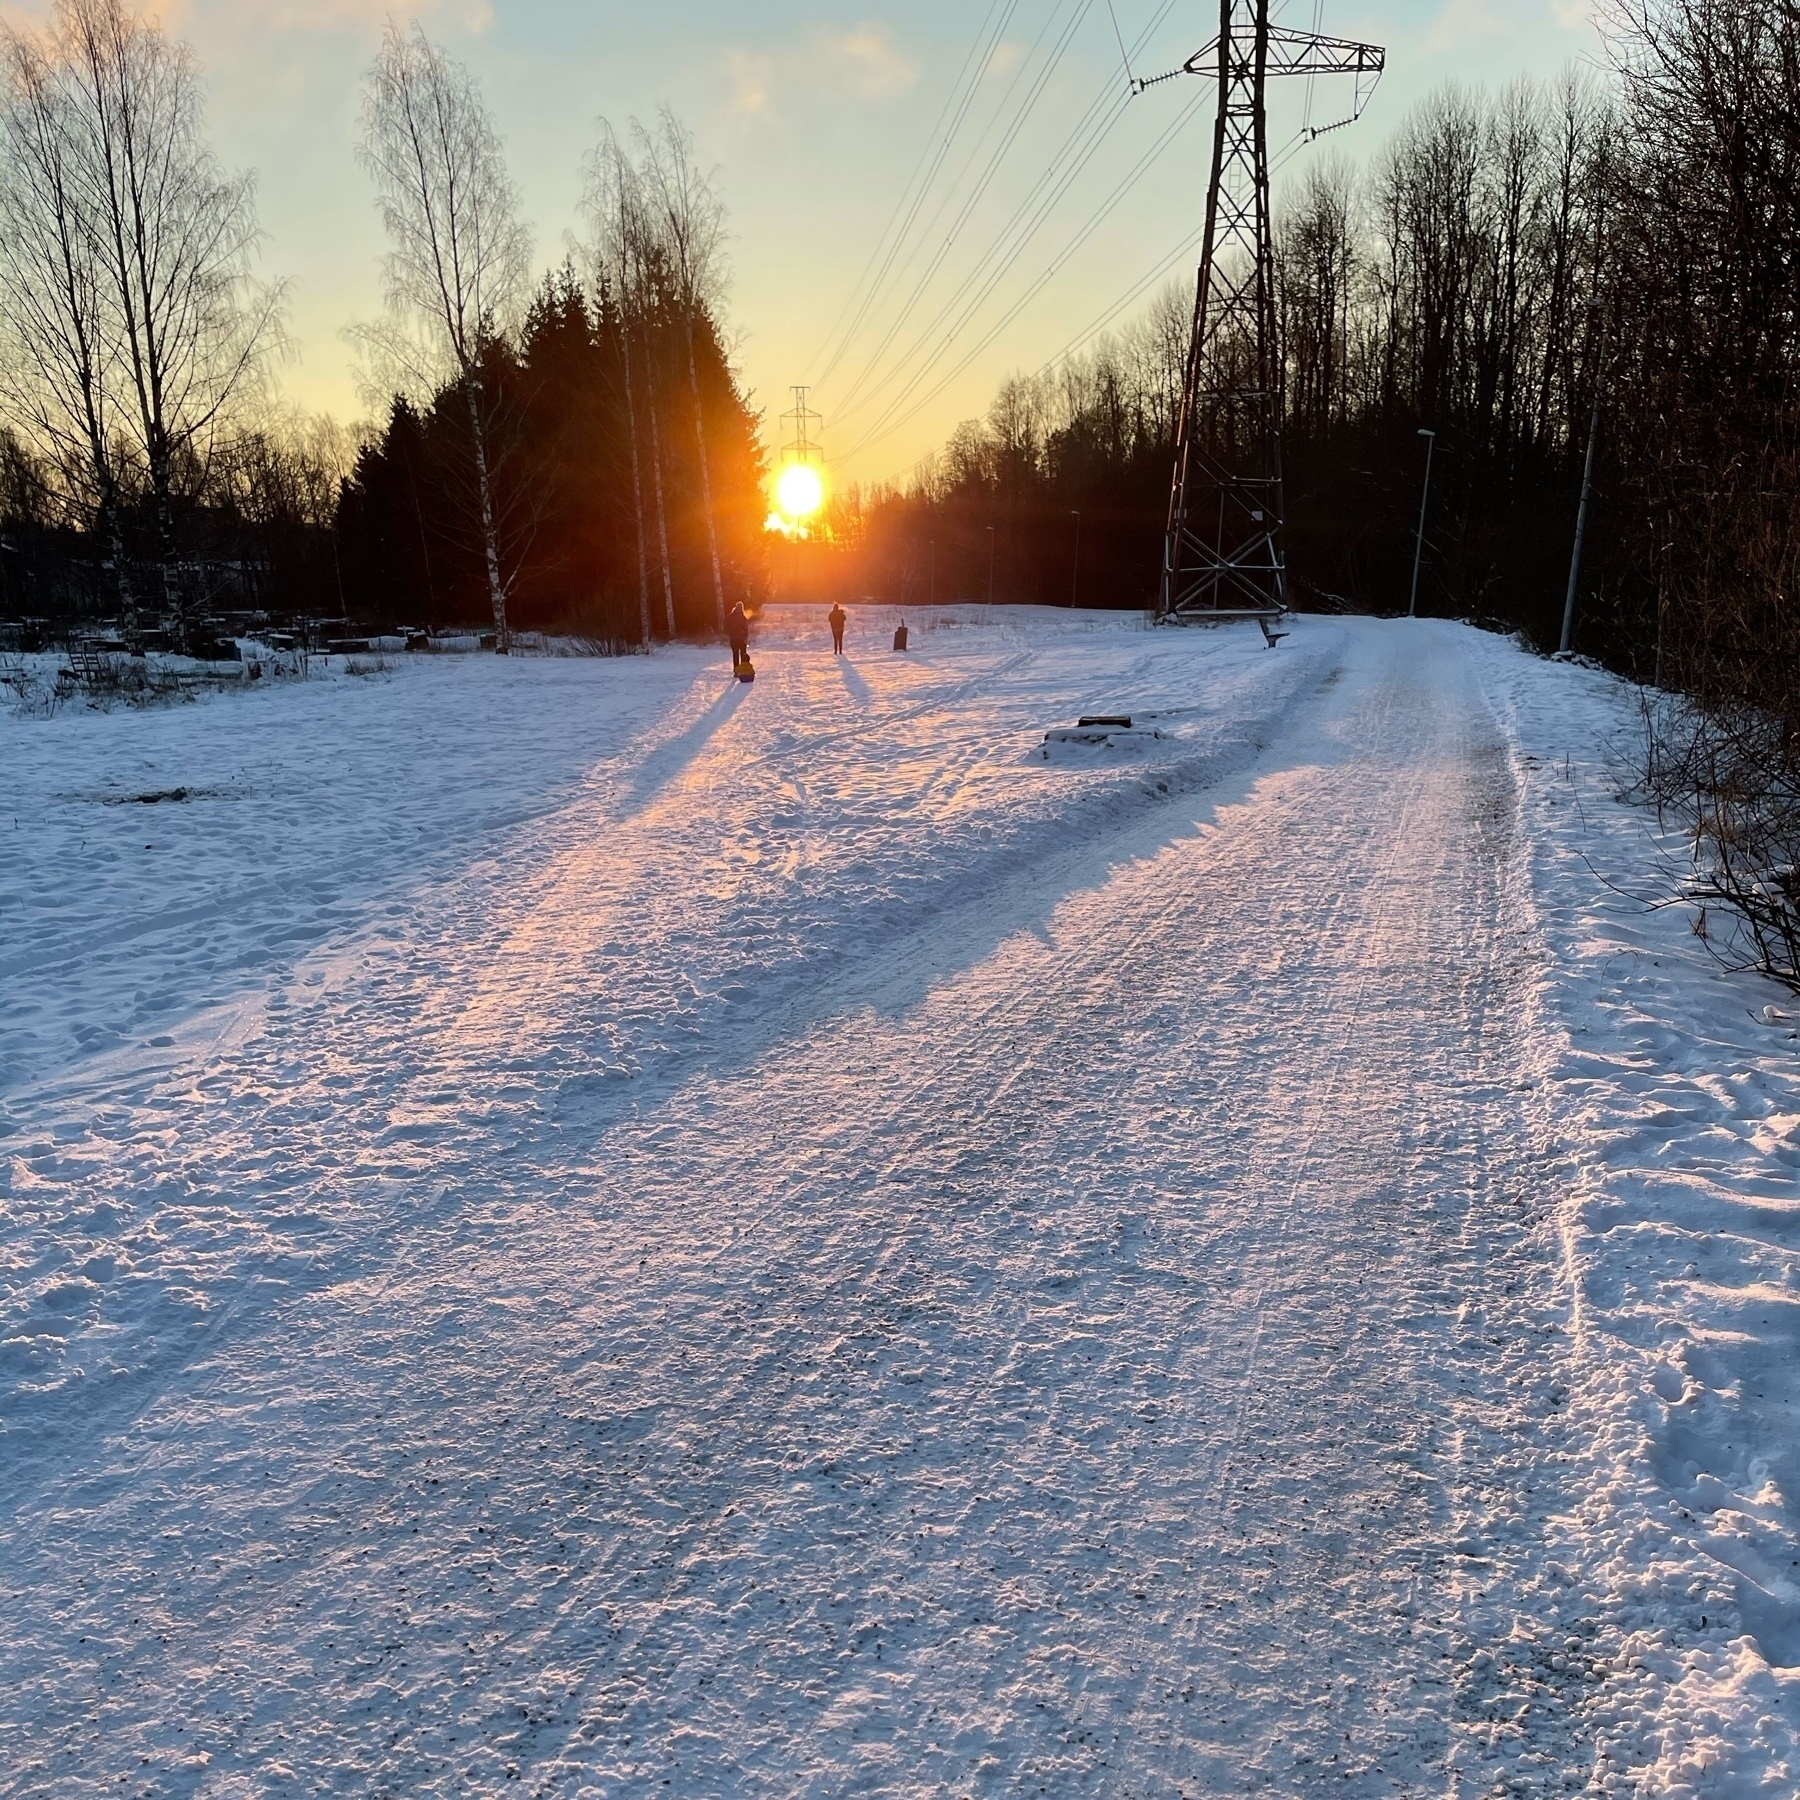 sun, snow, footprints on snow